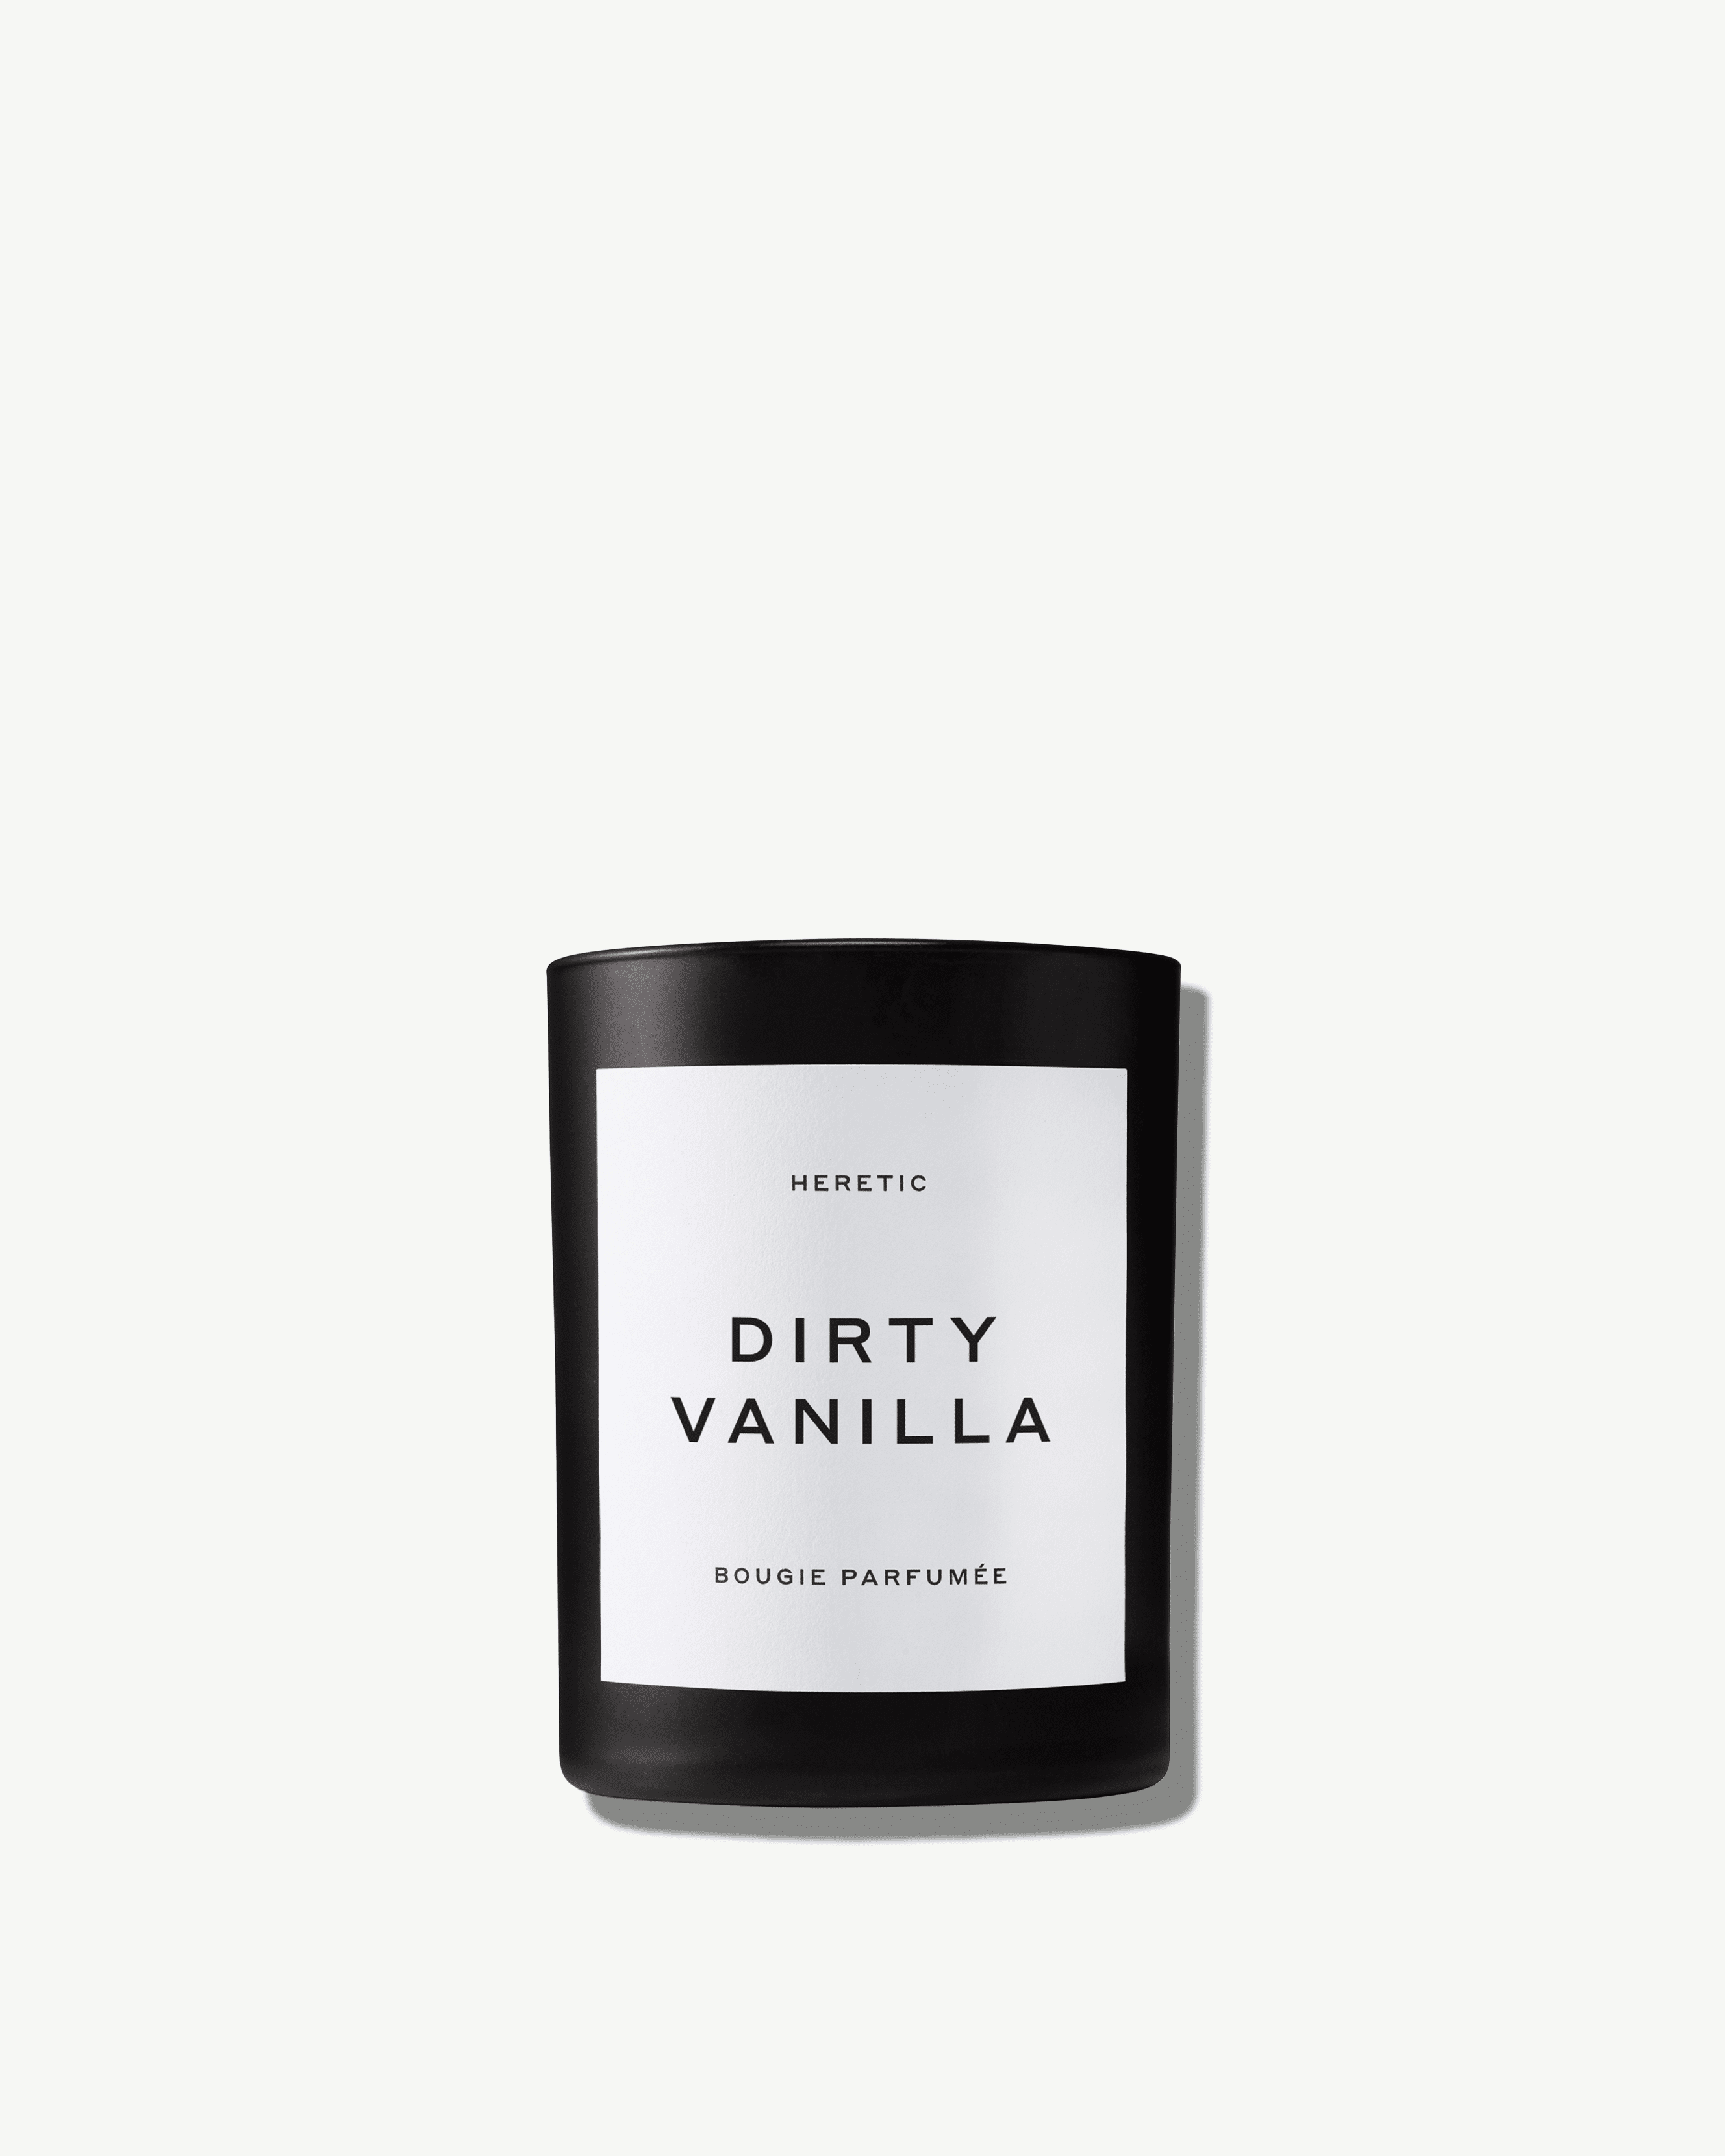 Dirty Vanilla Candle